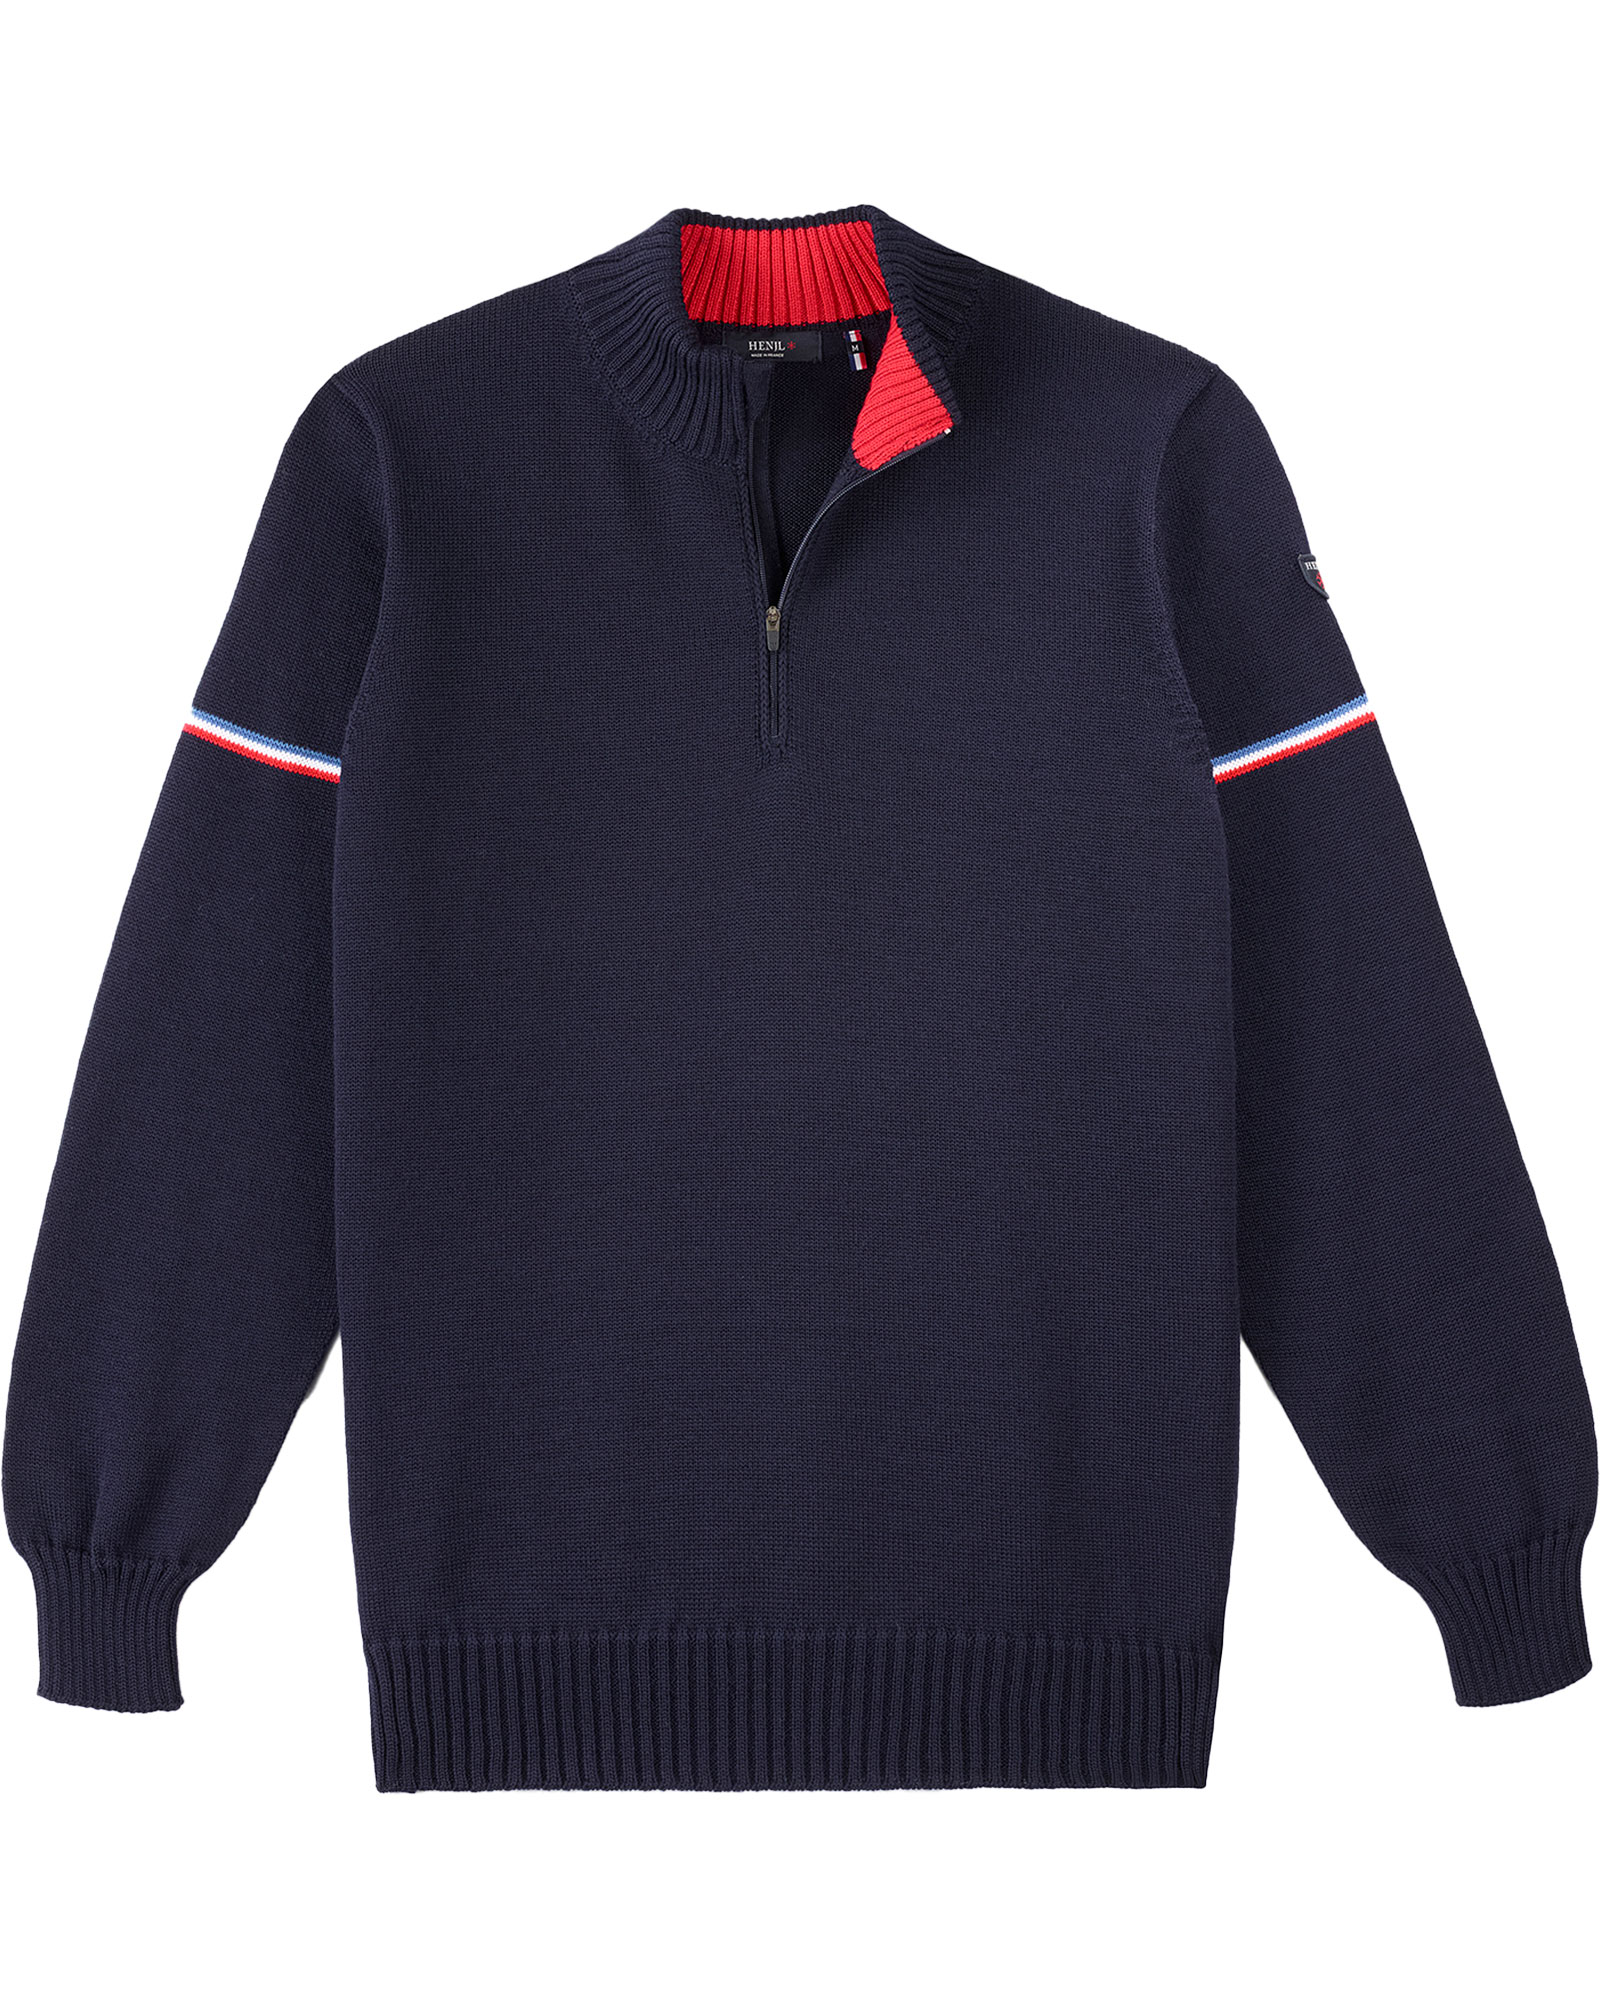 Henjl Men’s Dixon Sweater - Navy XL